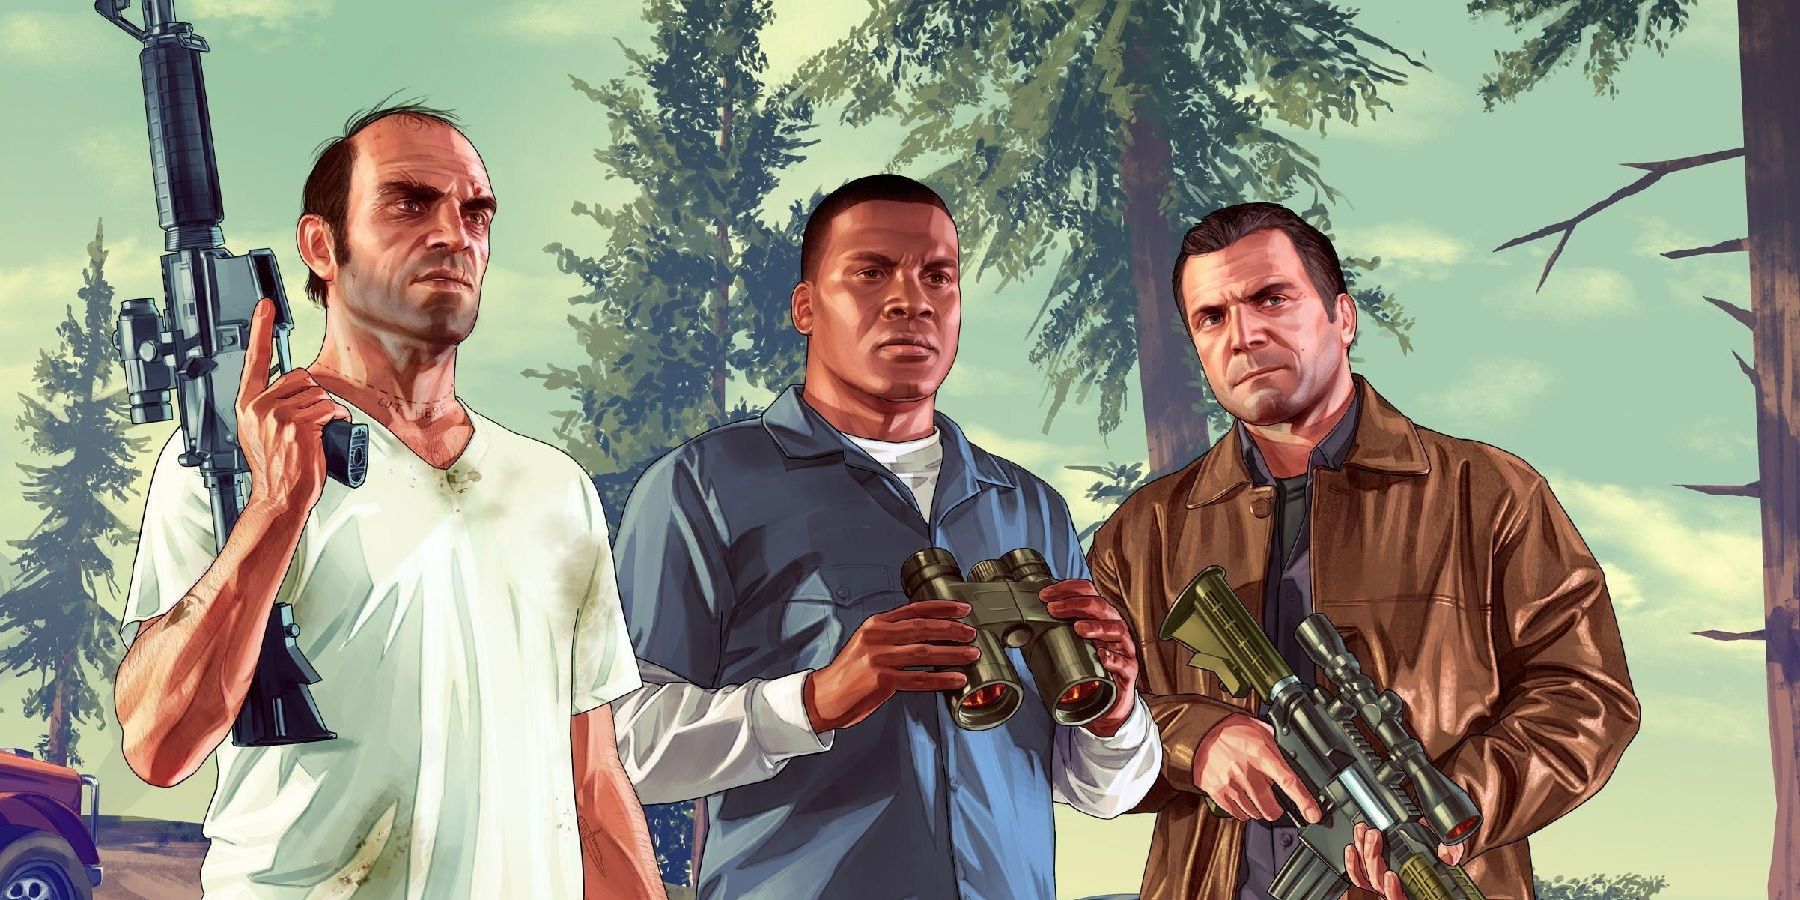 Take-Two Reconfirms Grand Theft Auto 6 Leaks Won't Impact
Development